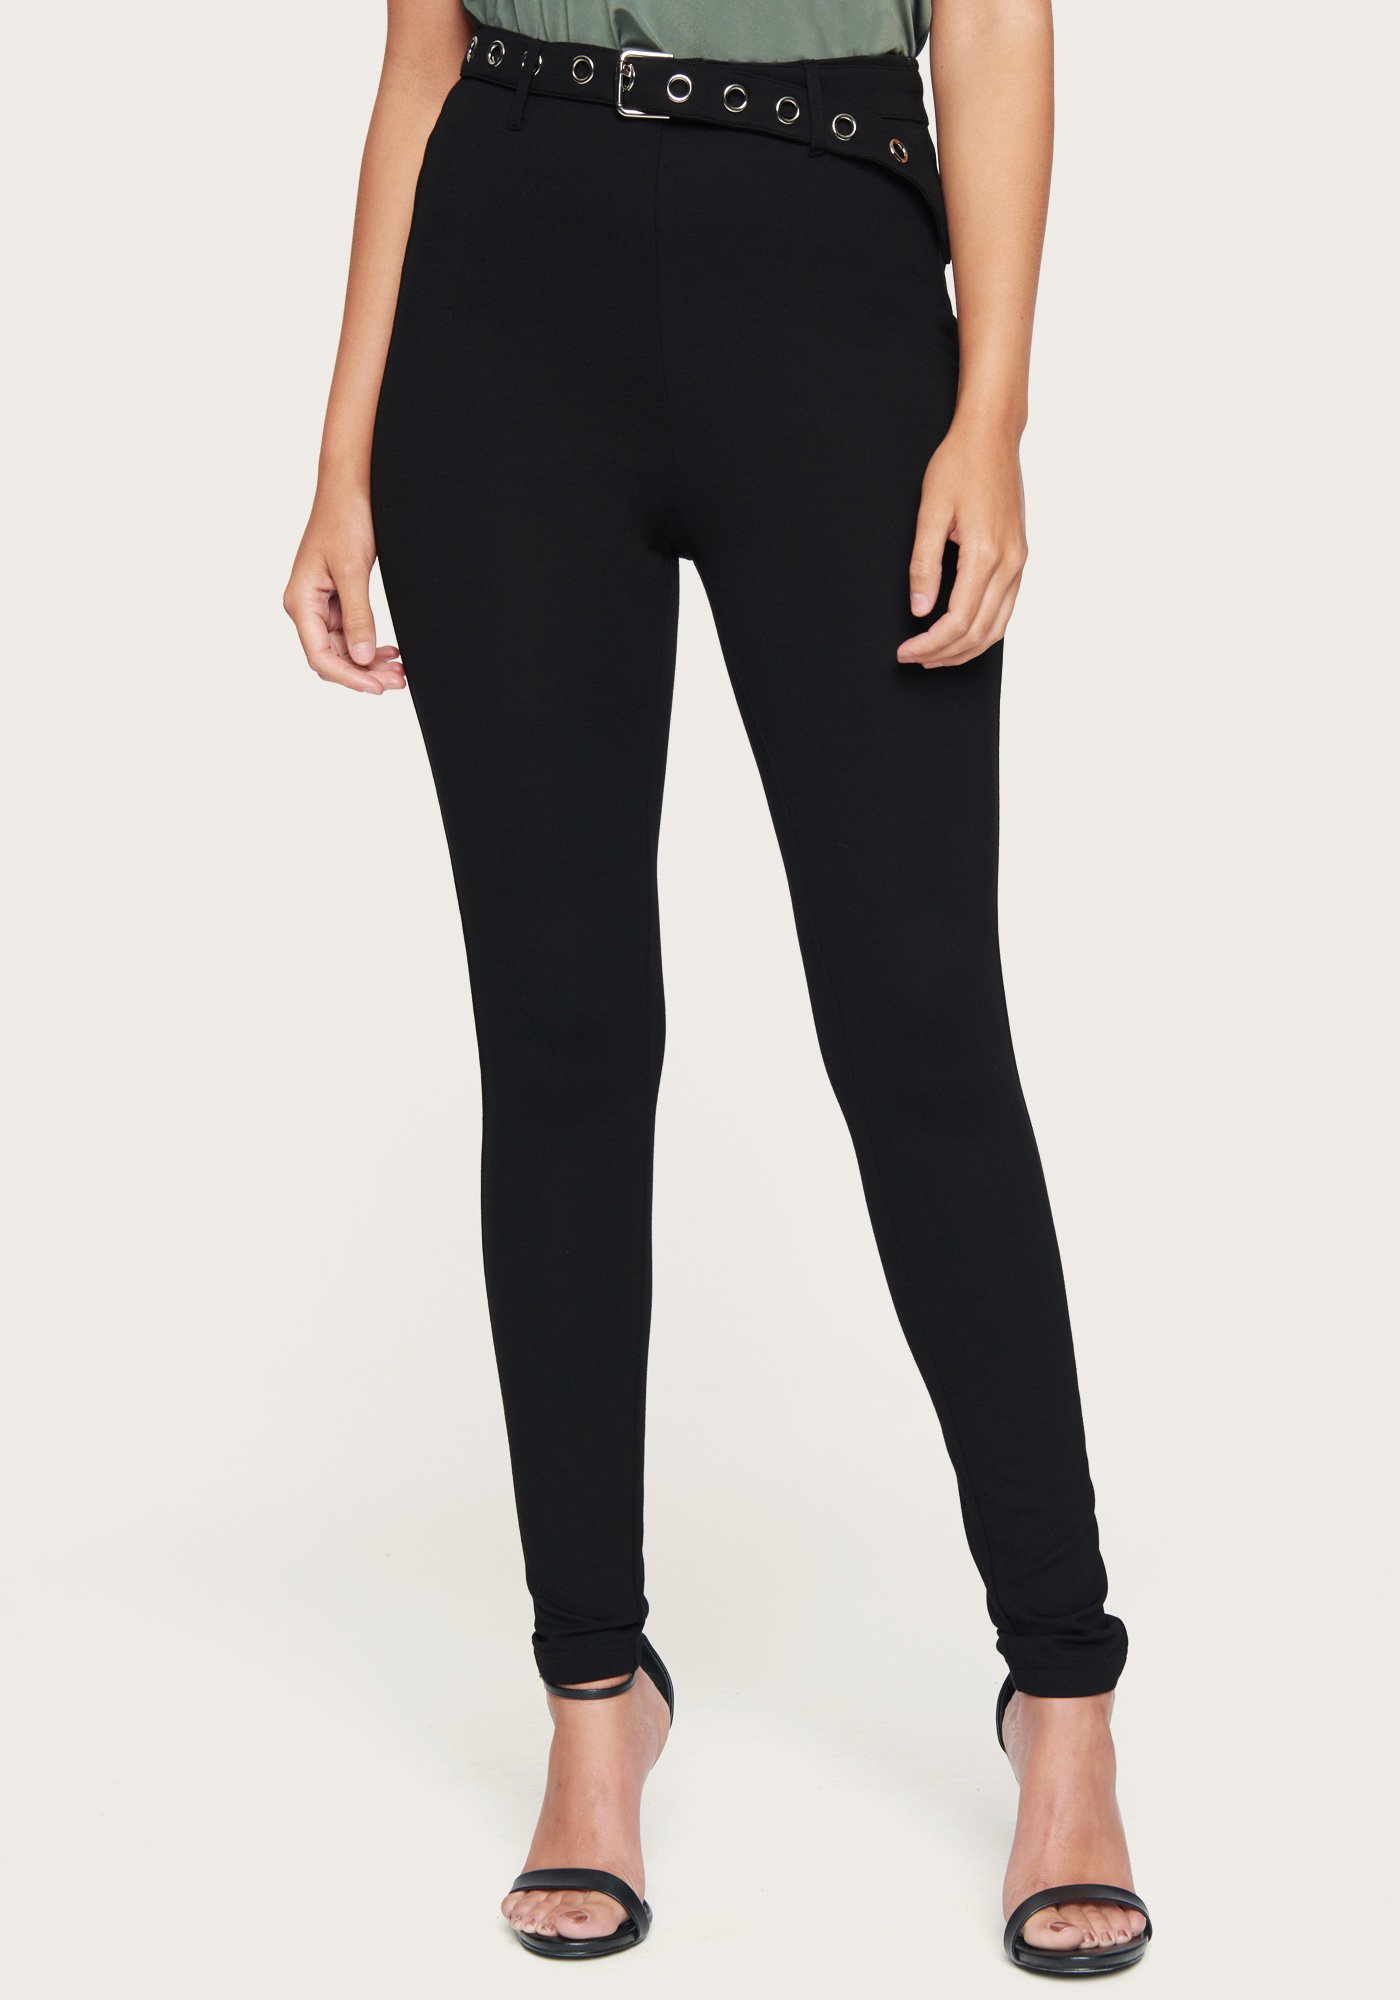 Bebe Women's Belted Leggings, Size XL in Black Spandex/Nylon